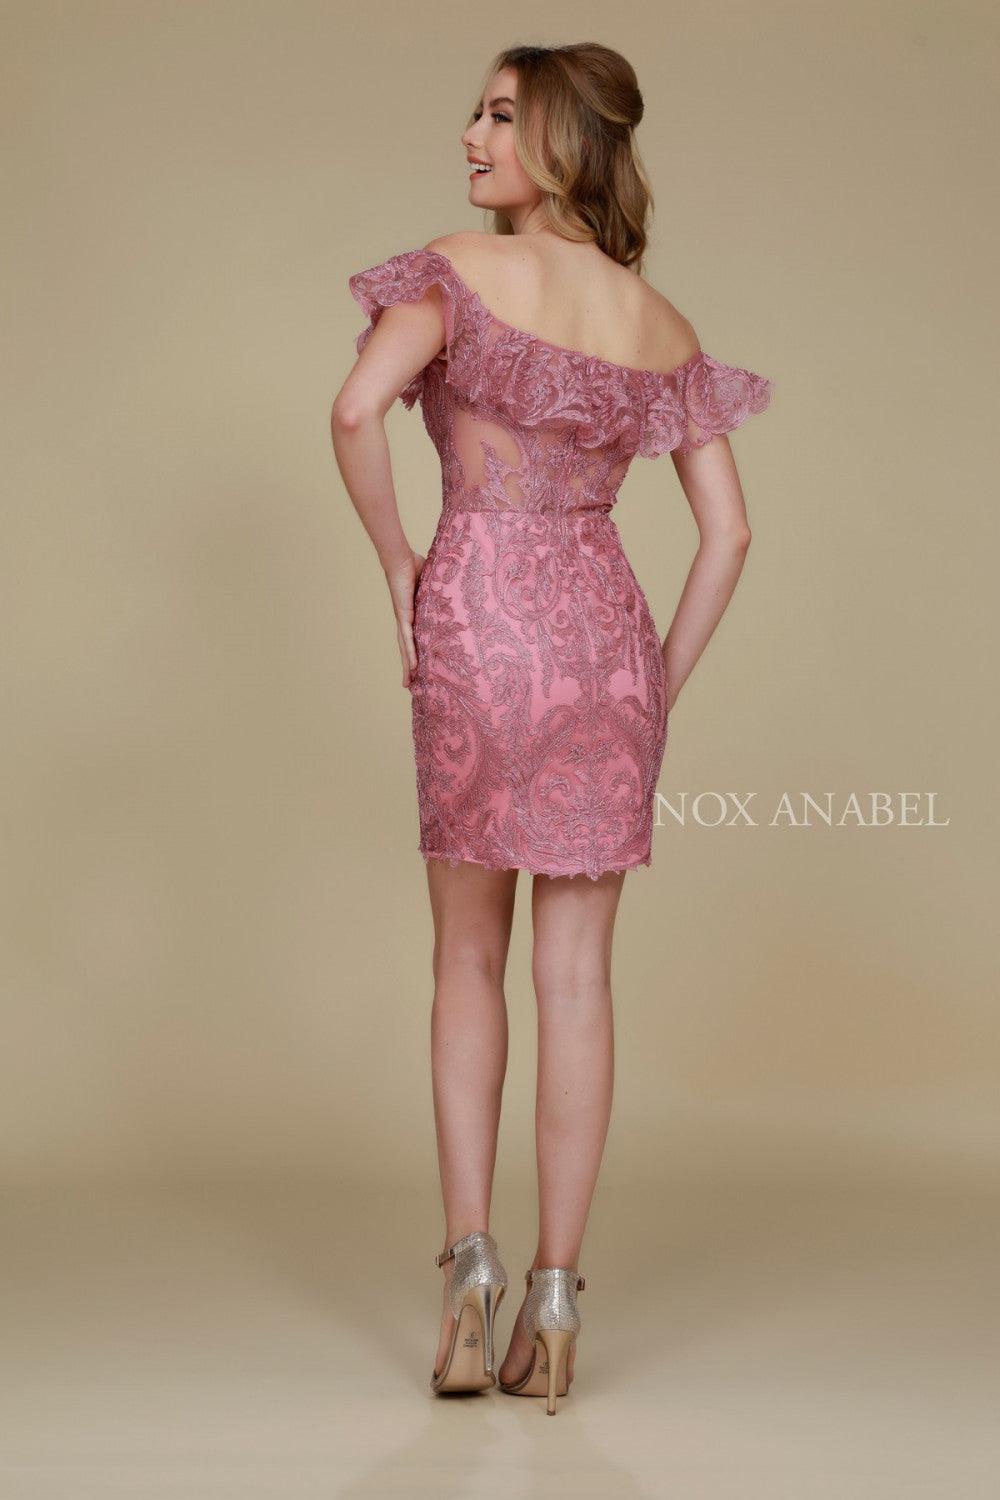 Short Ruffled Off The Shoulder Formal Cocktail Dress - The Dress Outlet Nox Anabel